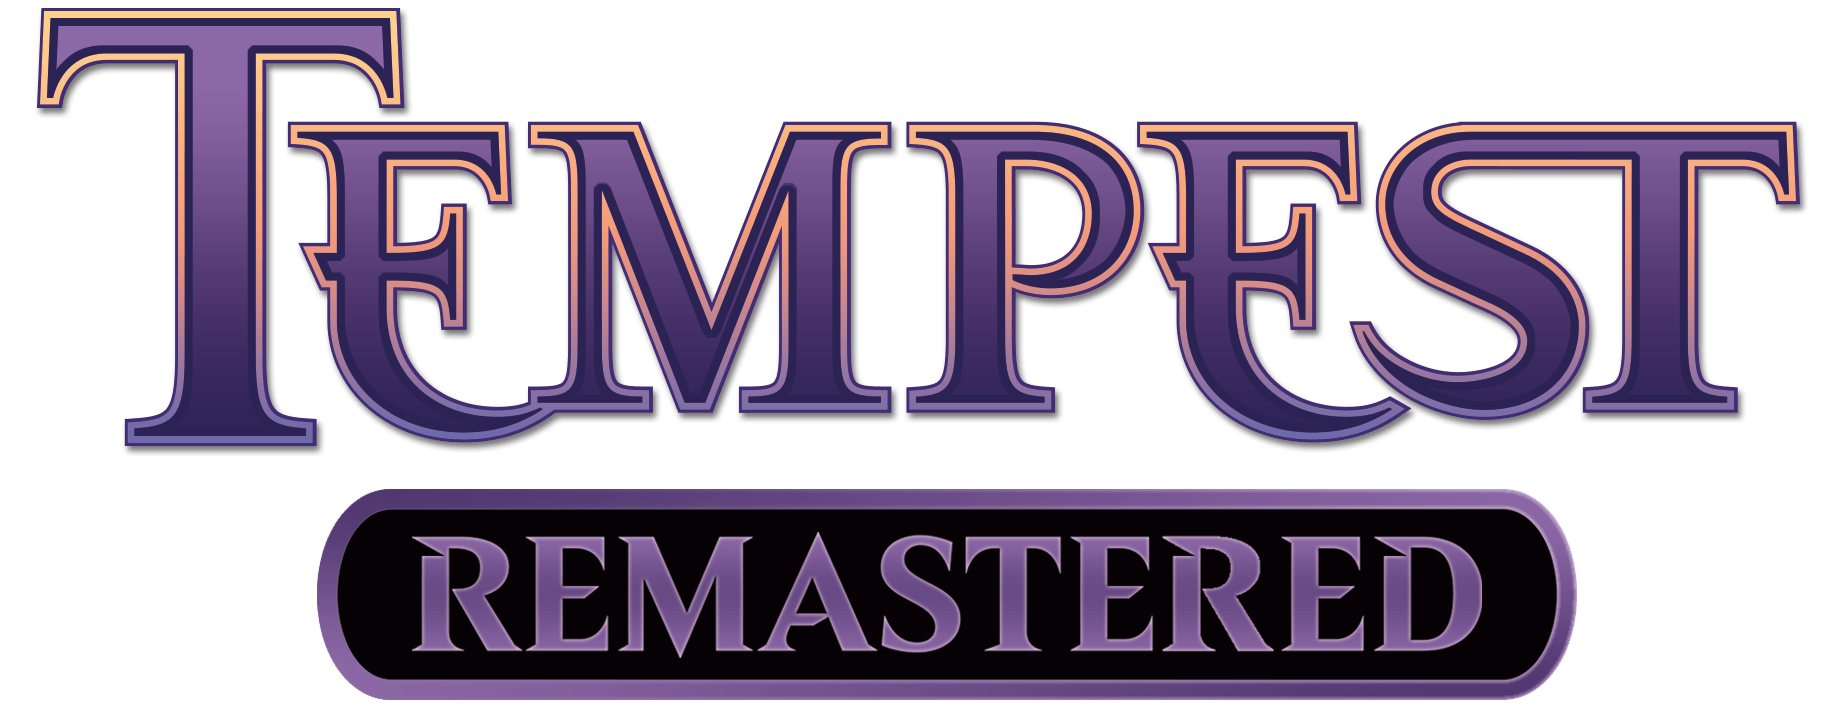 Remastered Logo - Announcing: Tempest Remastered Rumor Mill Fundamentals